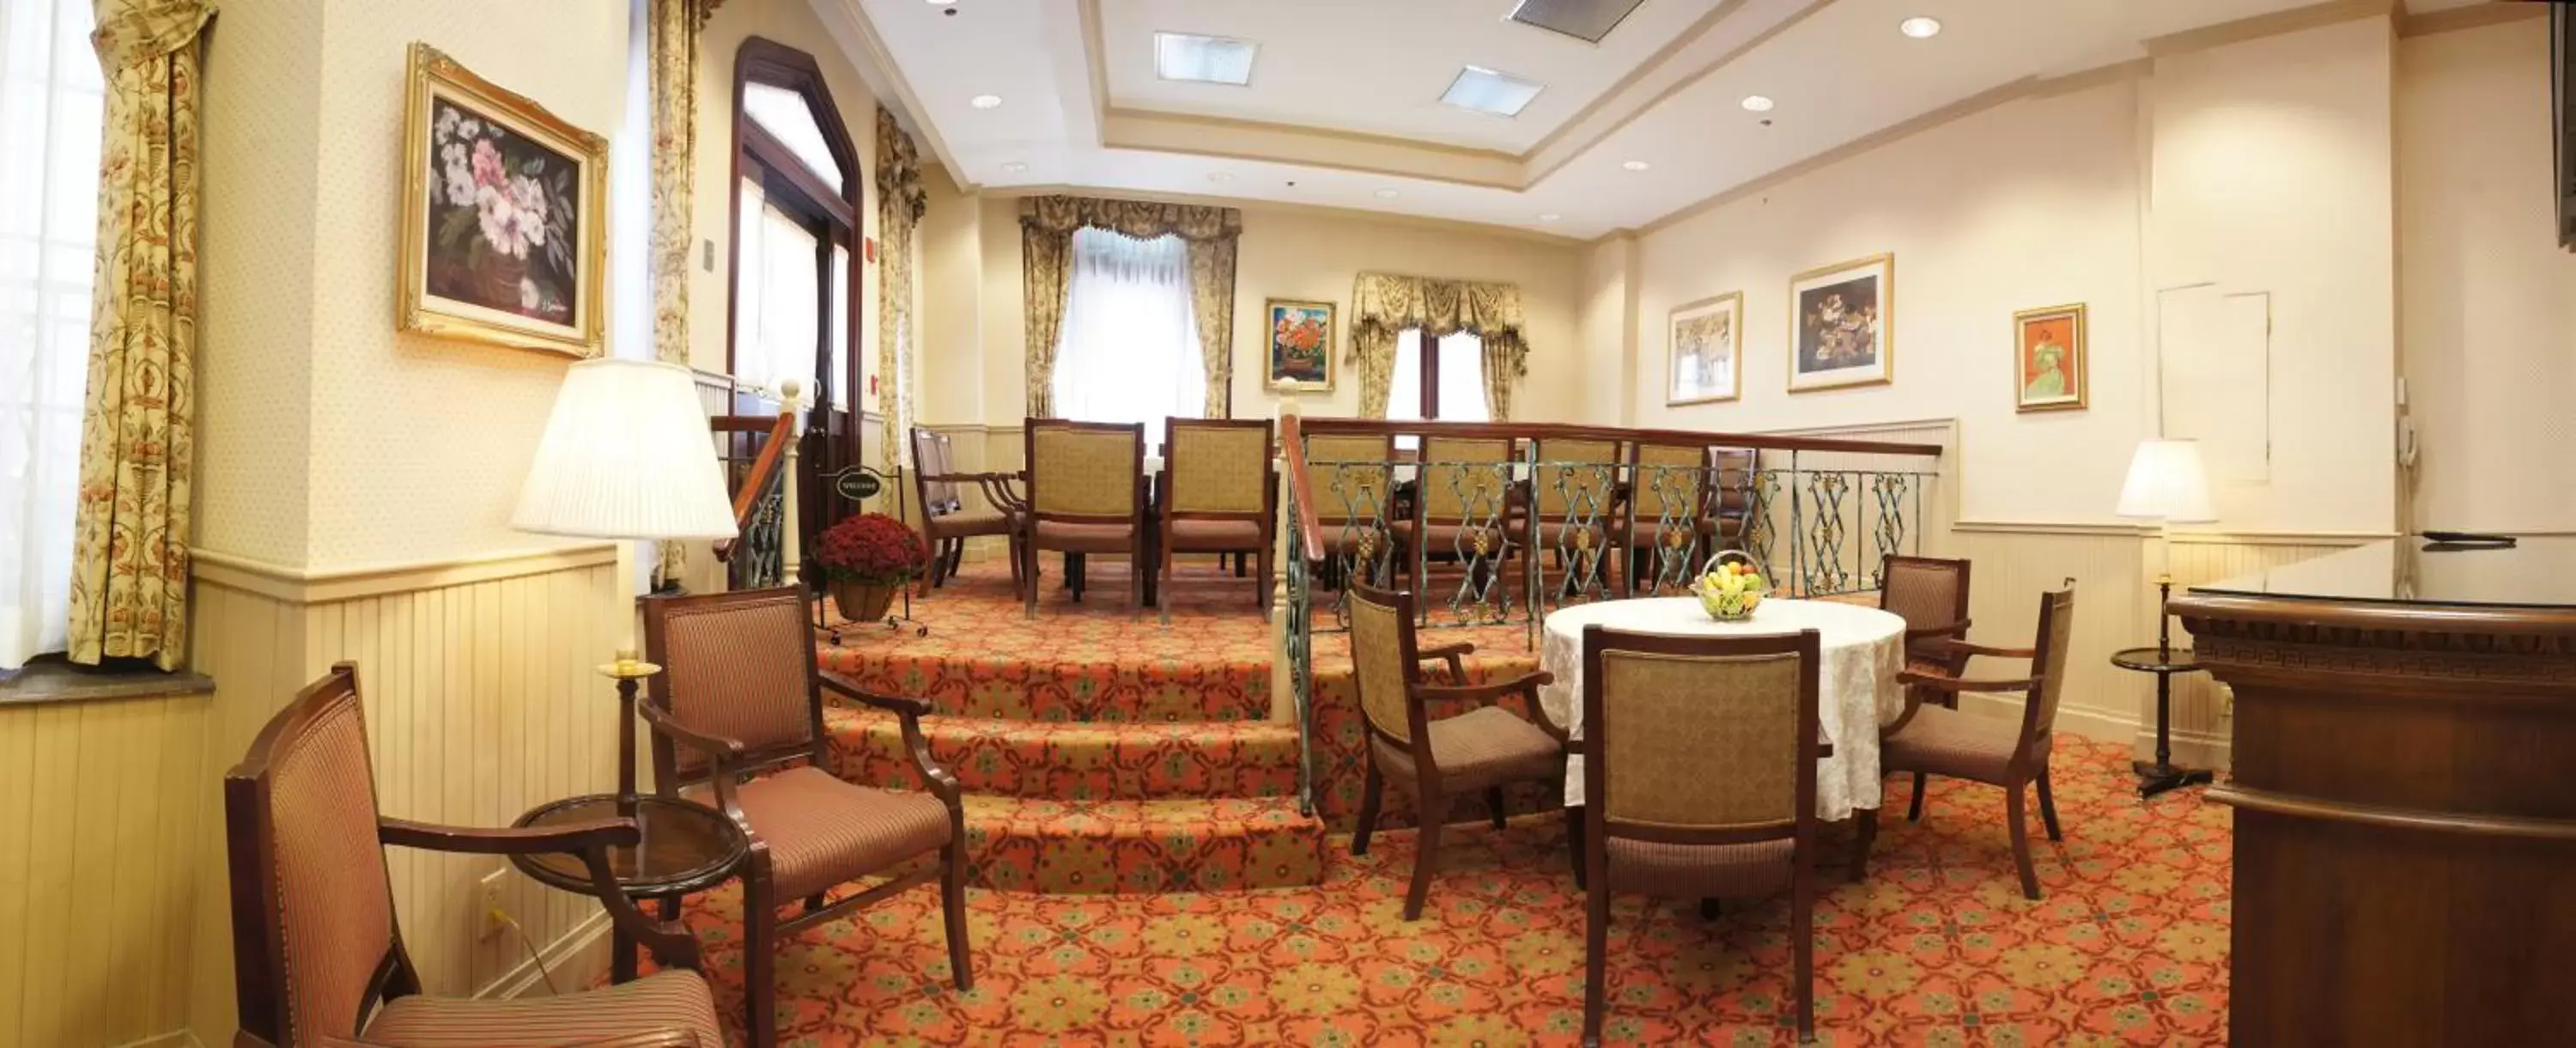 Banquet/Function facilities, Lounge/Bar in The Wall Street Inn